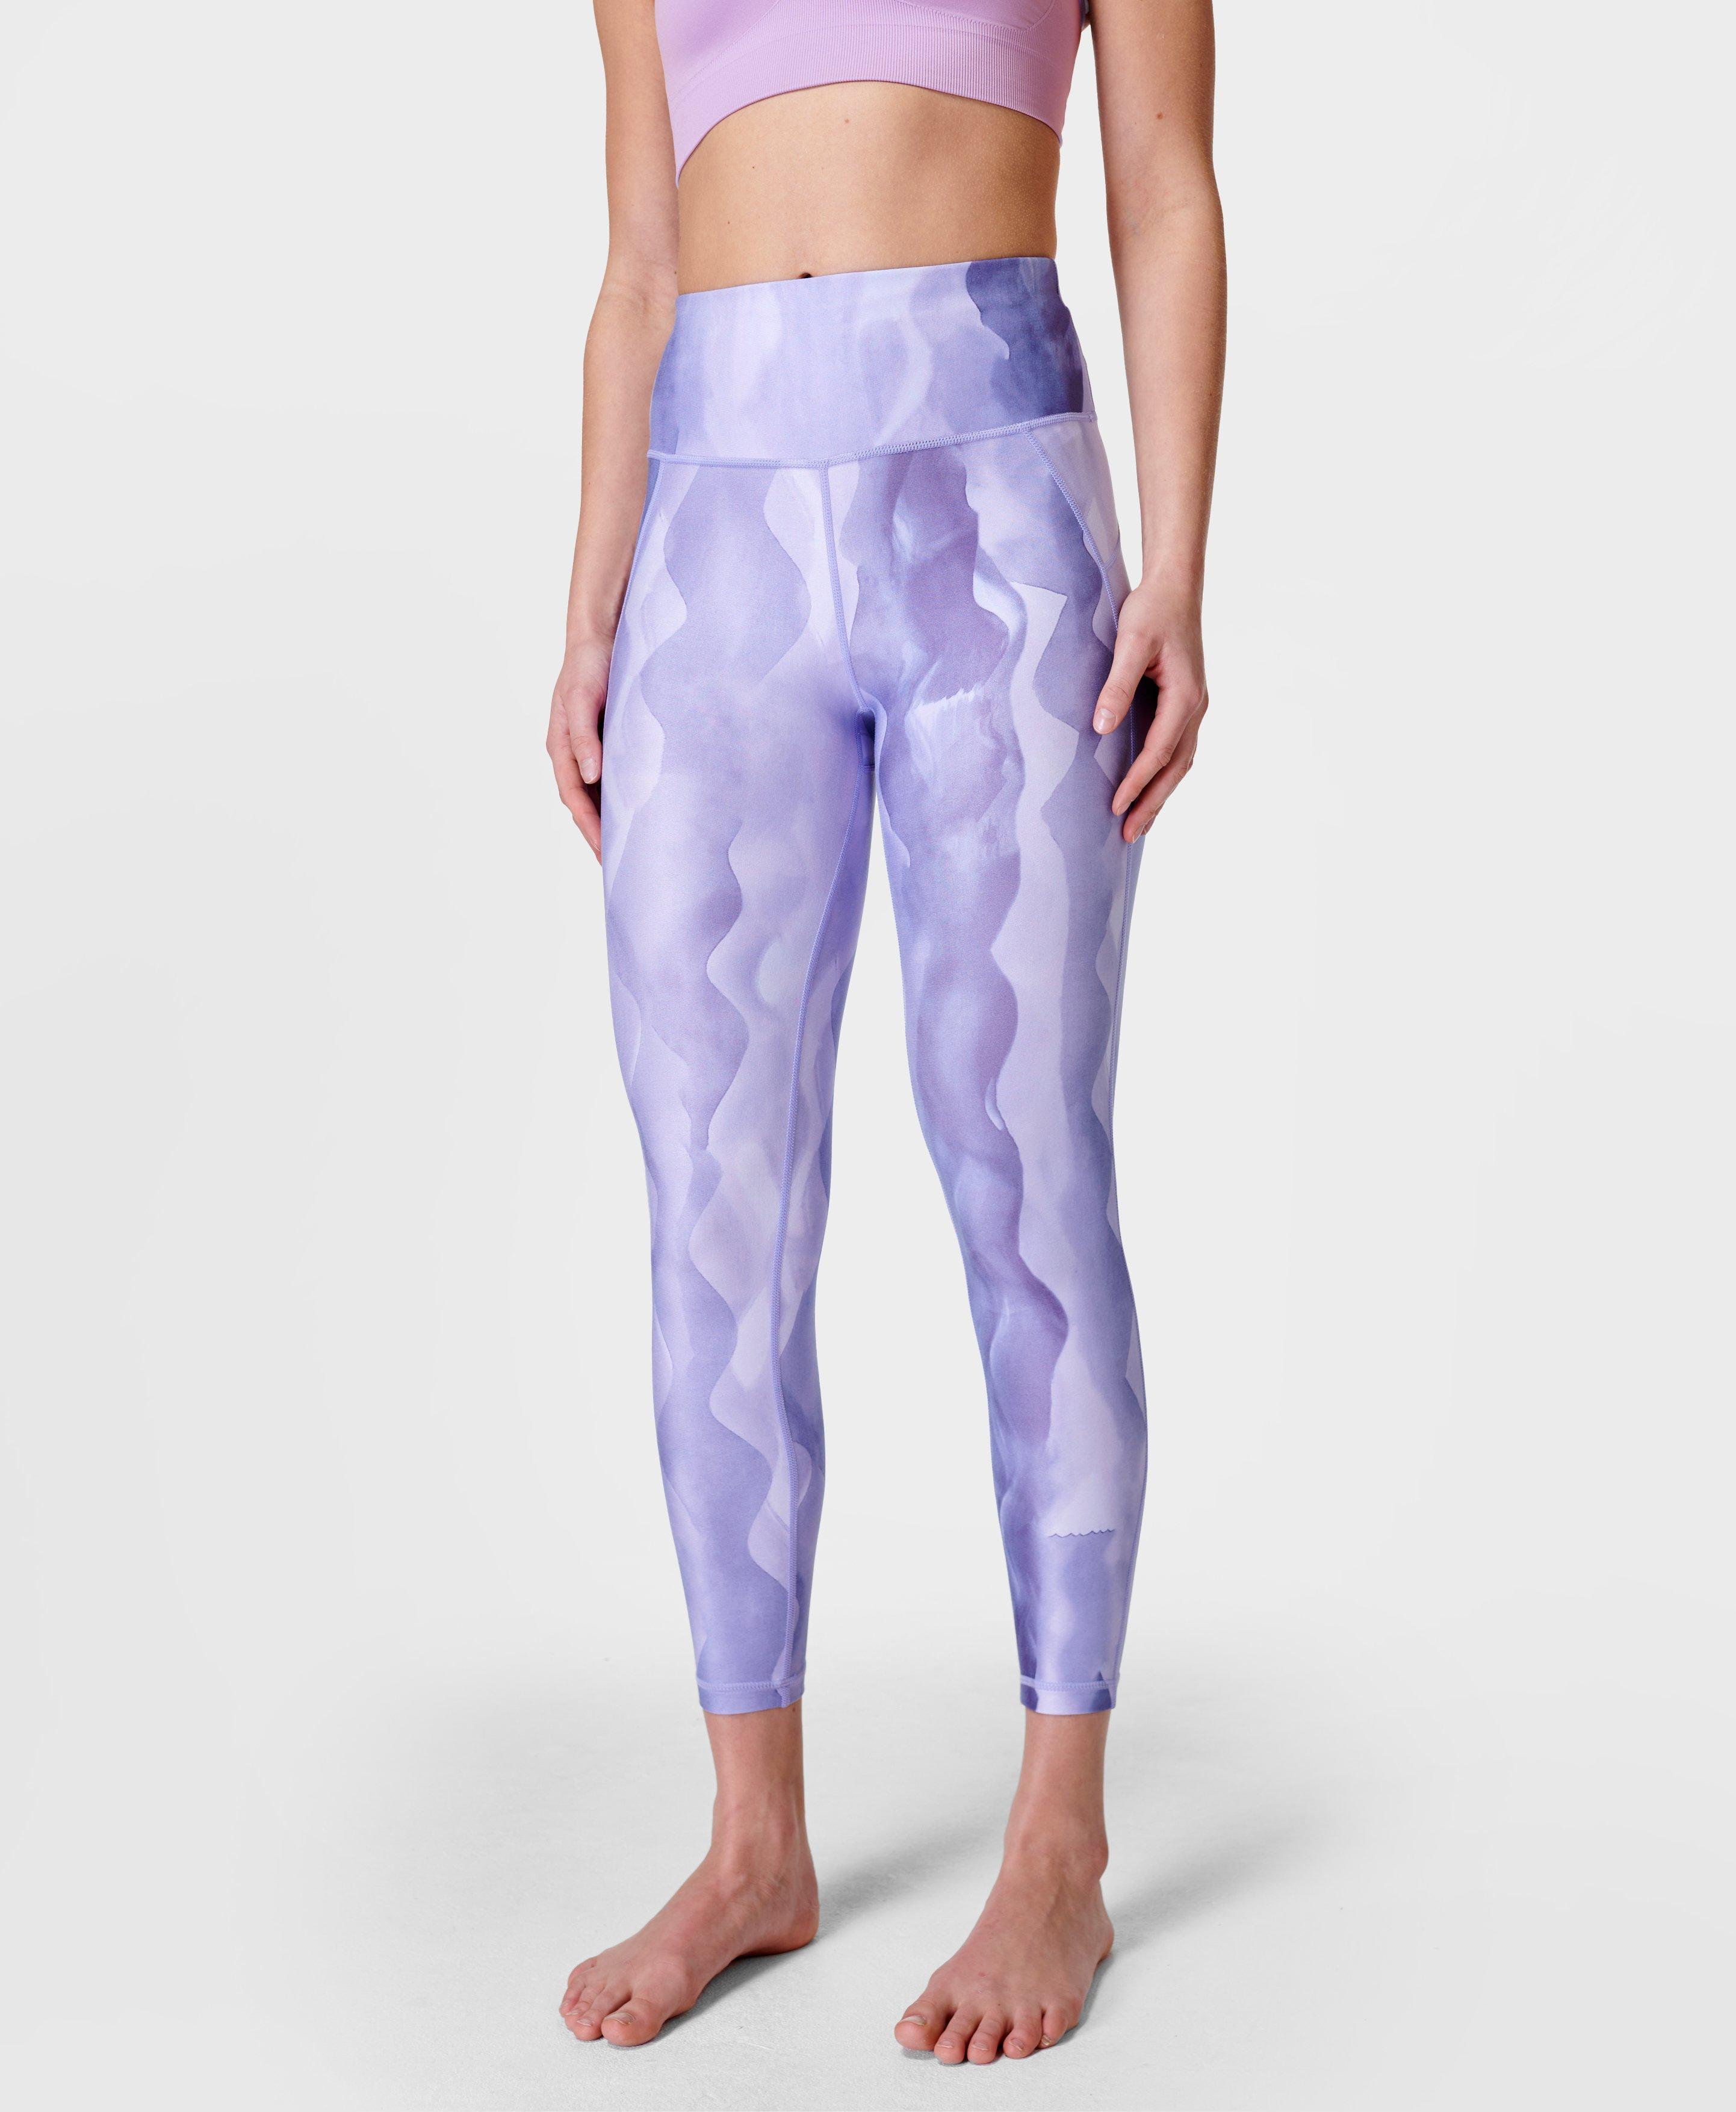 Super shiny and smooth vintage 80s purple leggings. - Depop